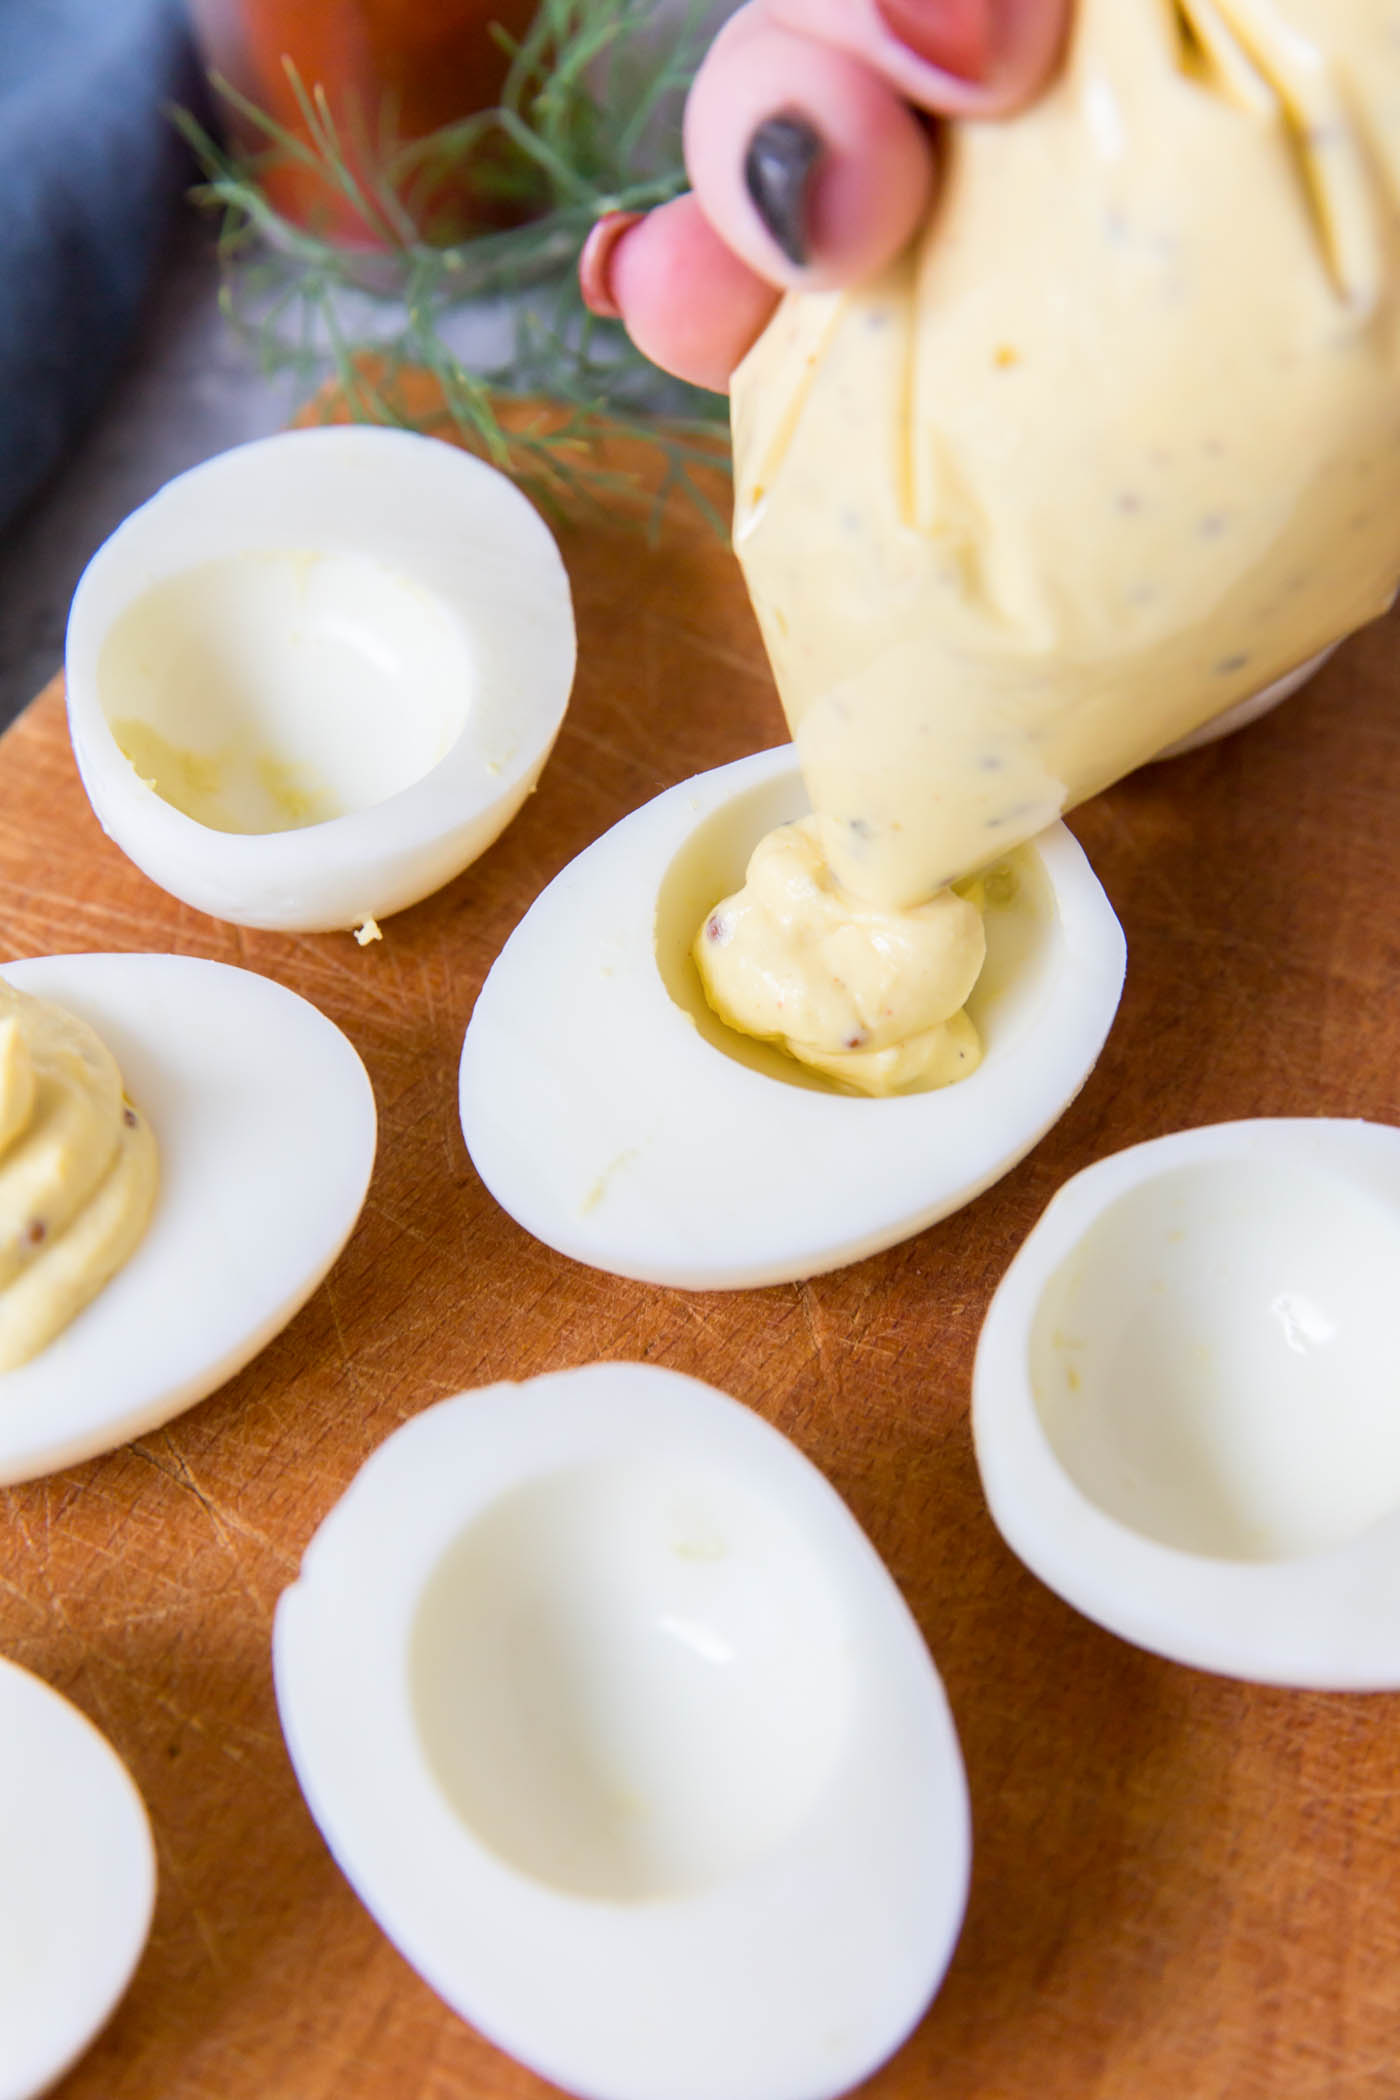 Piping yolk filling into egg whites.